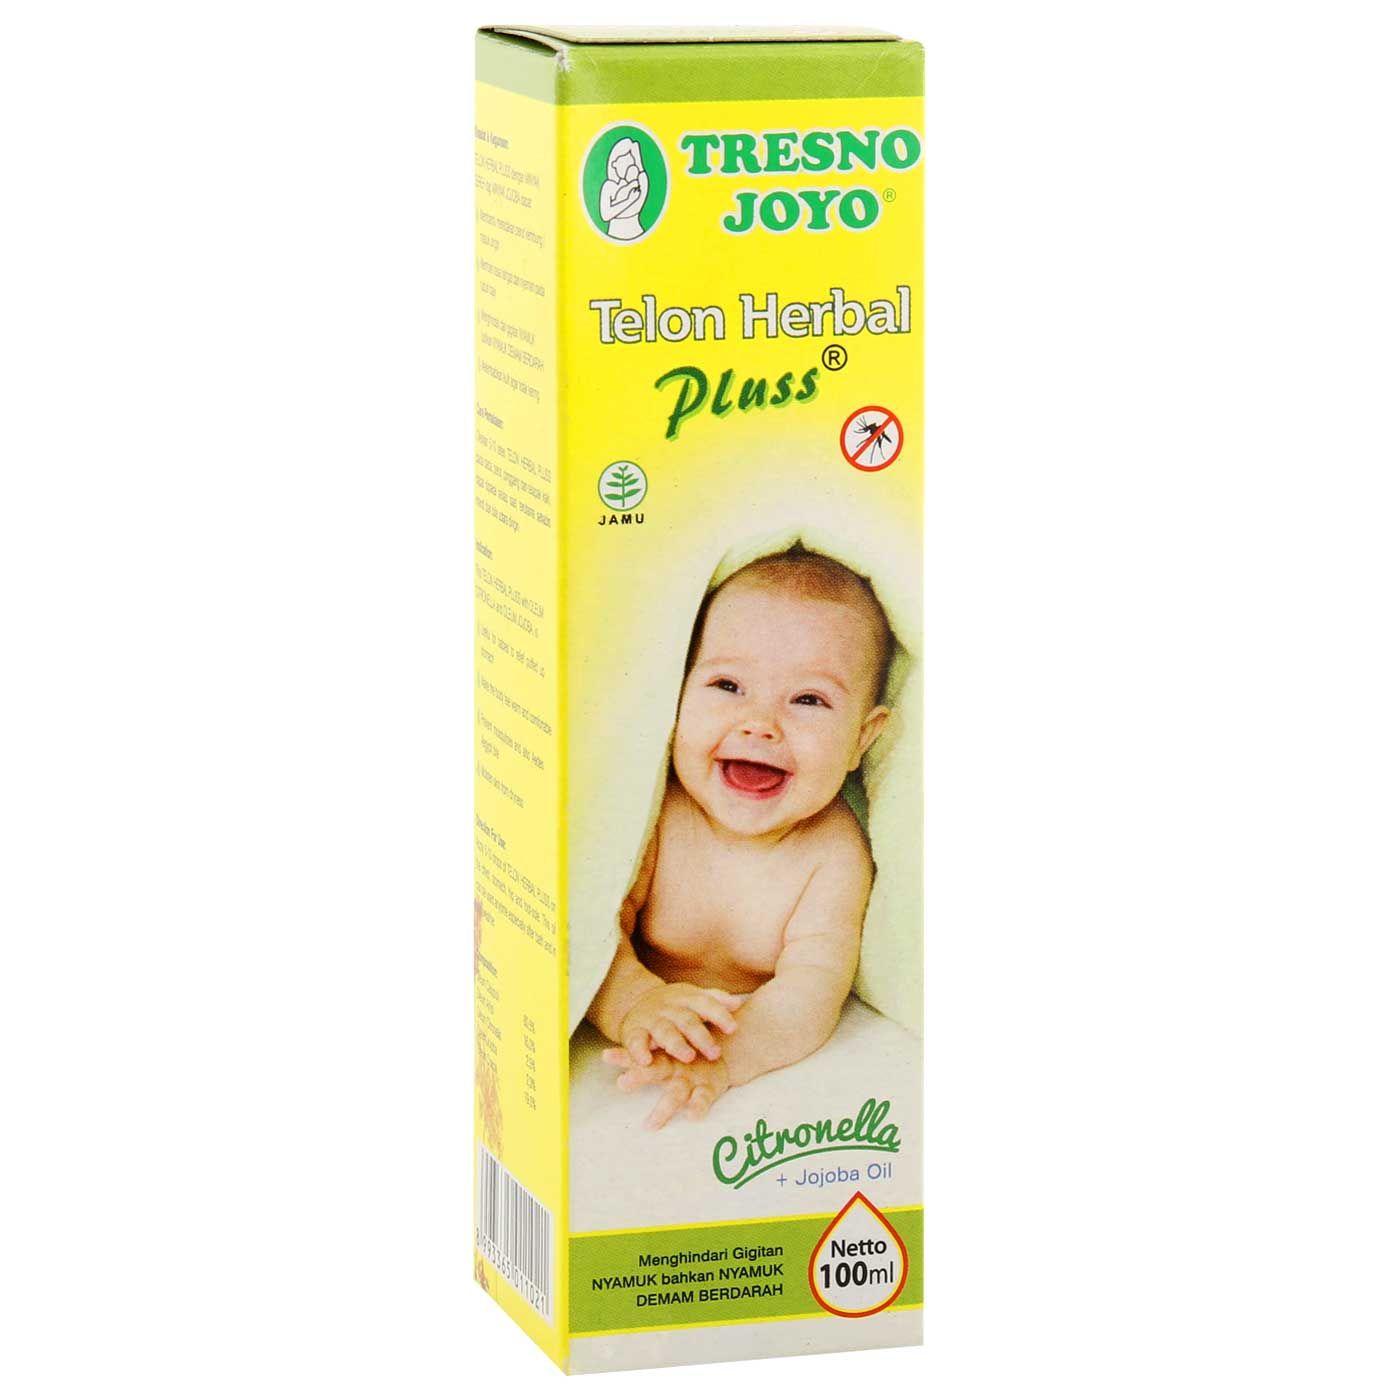 Tresno Joyo Minyak Telon Herbal Plus Citronella 100ml - 3